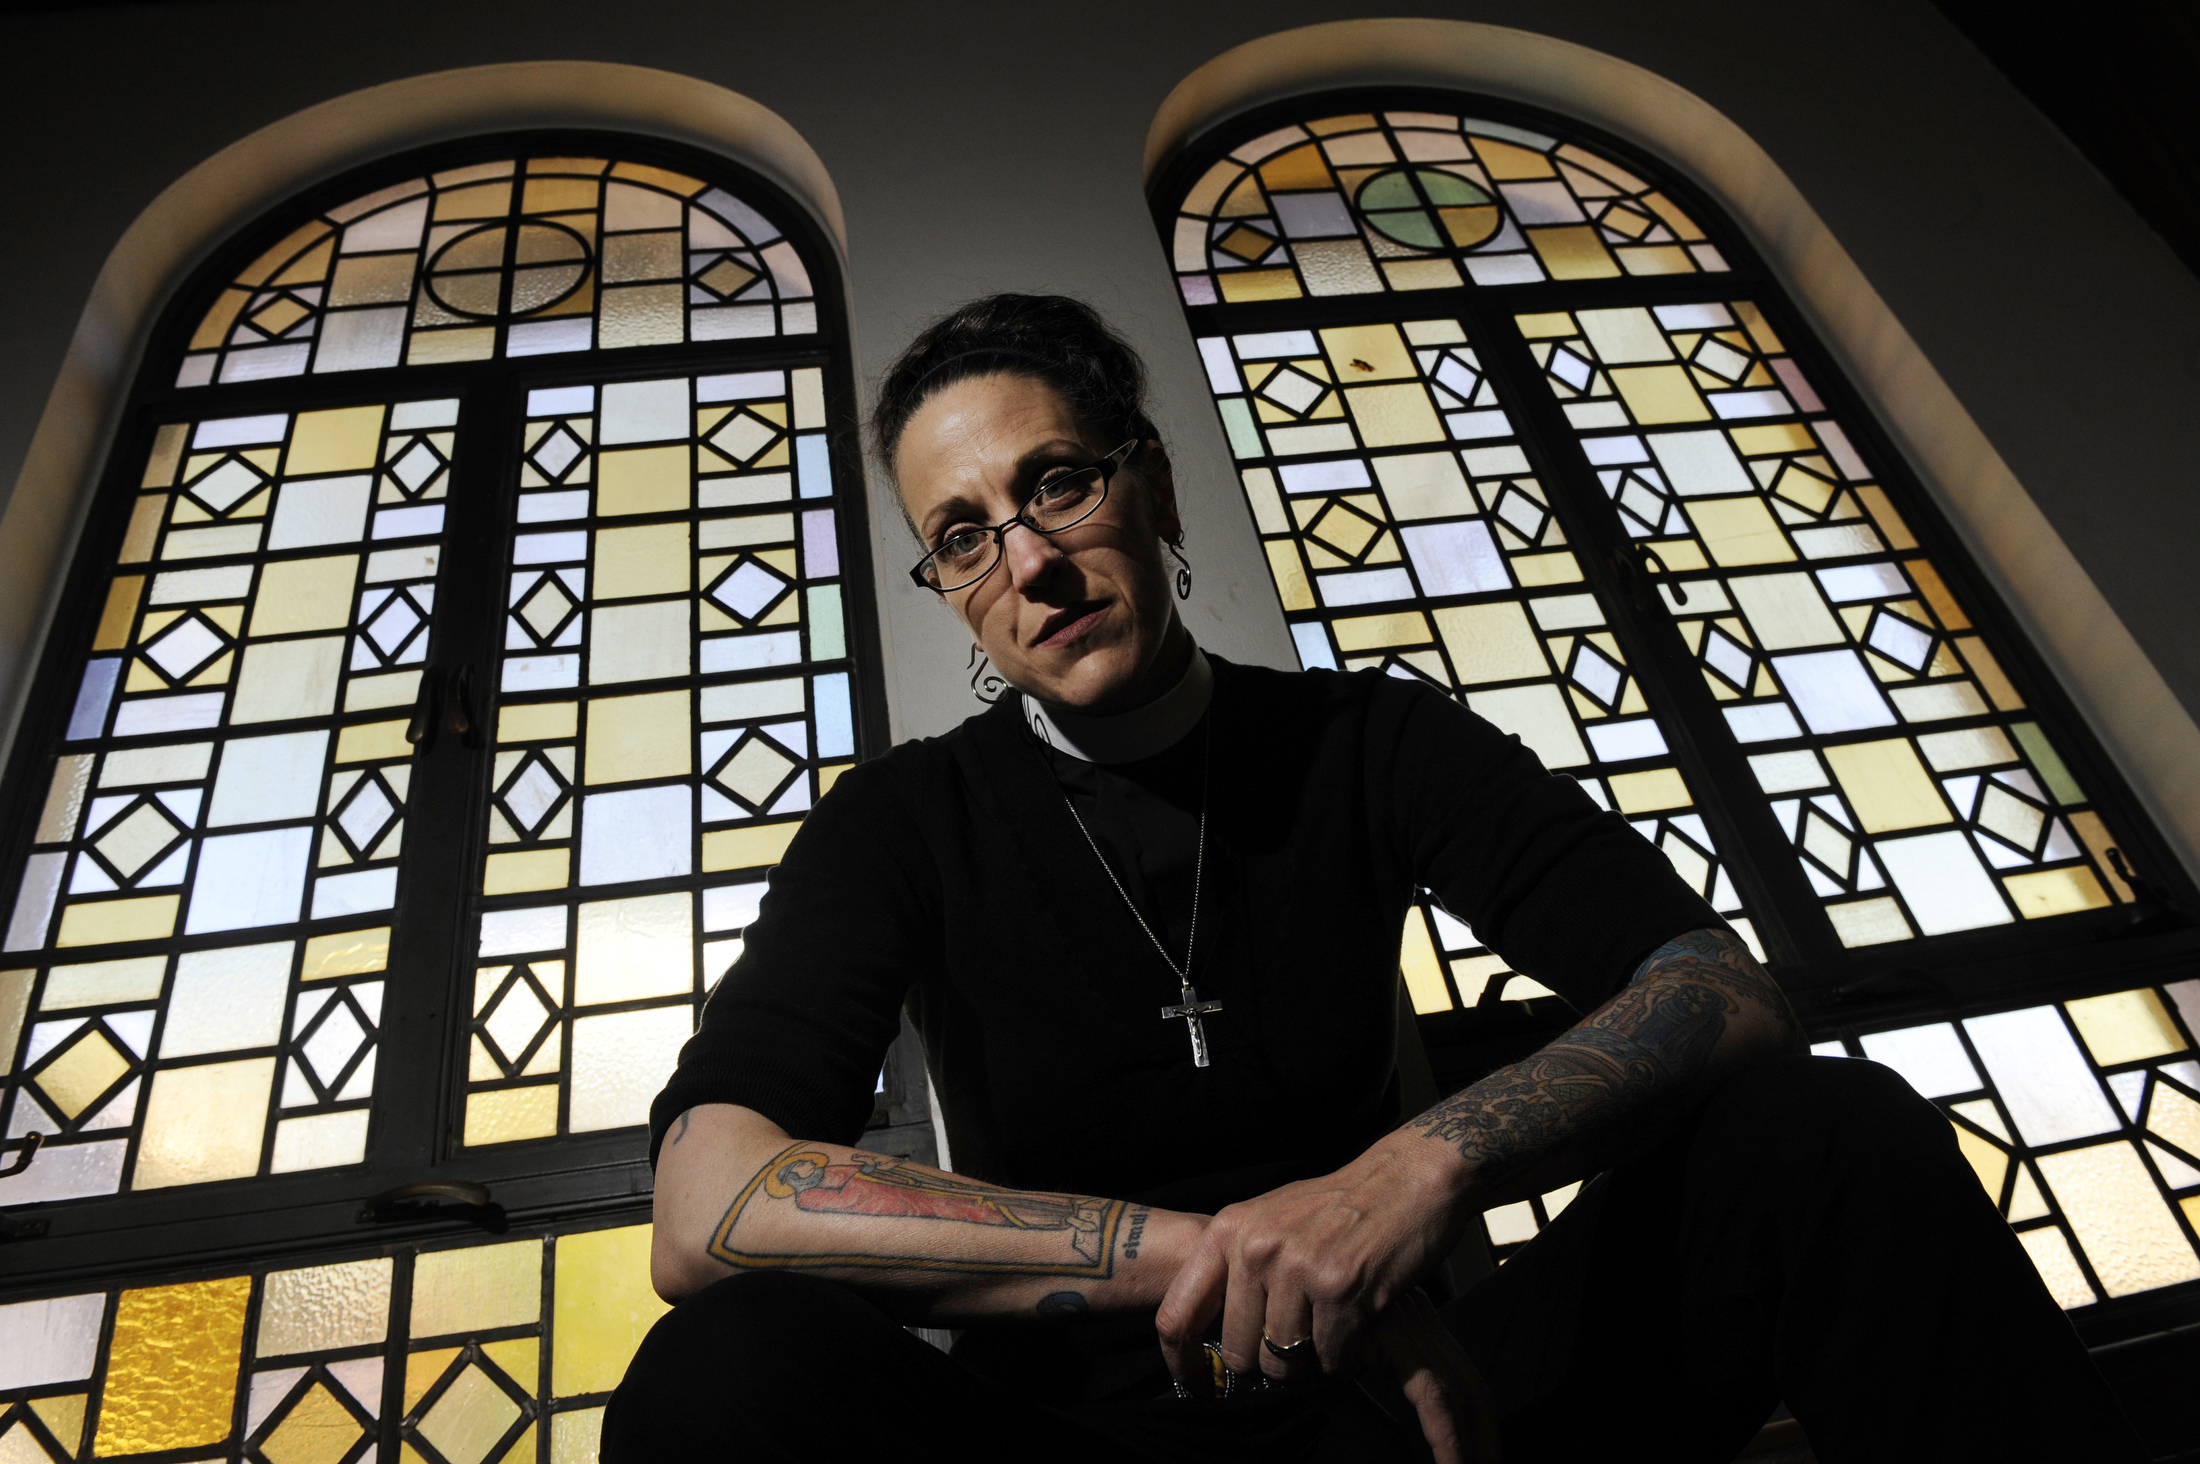 Las Vegas pastor gets a tattoo during sermons to teach about faith change   Las Vegas ReviewJournal